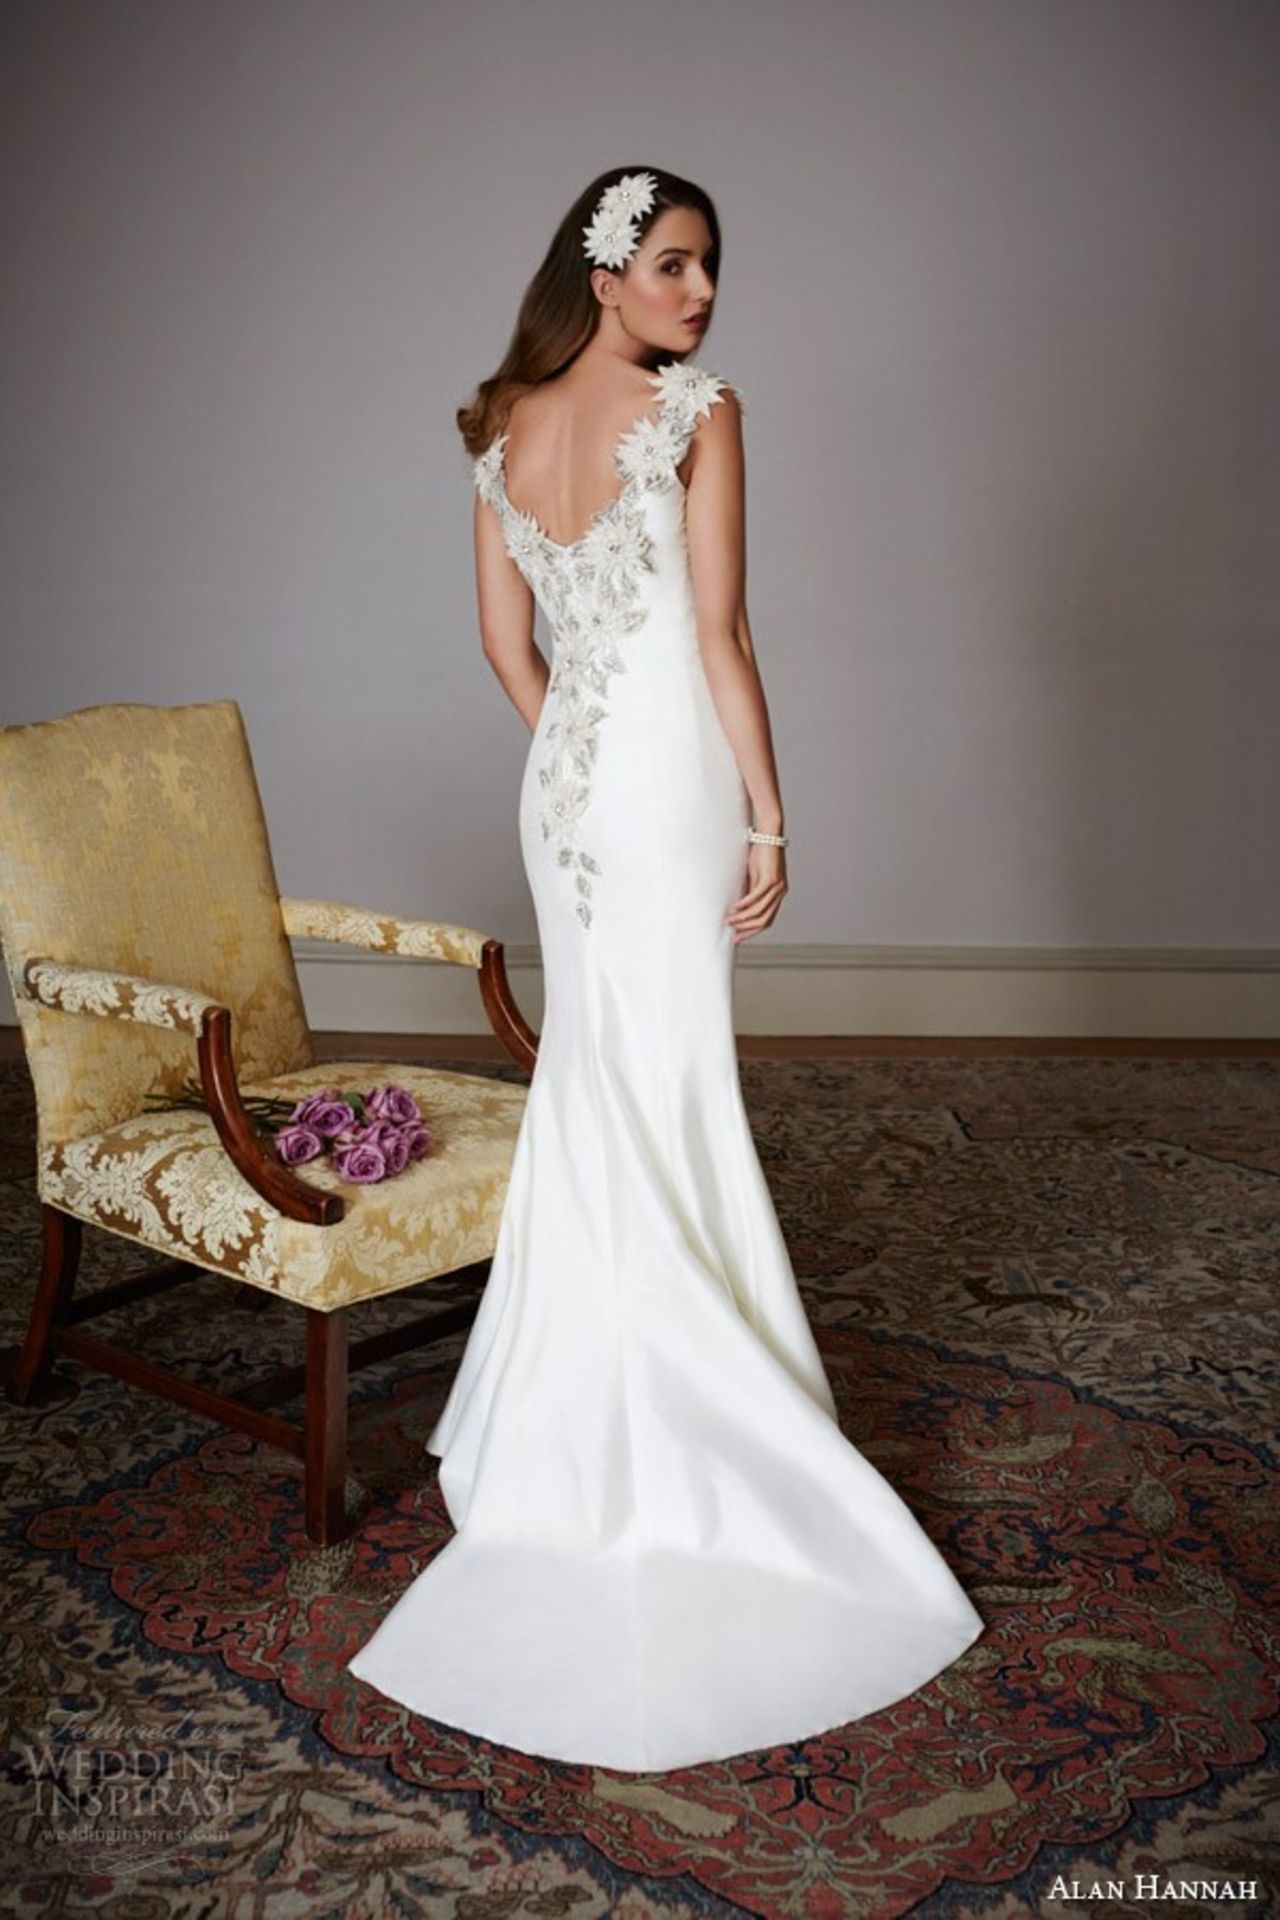 1 x ALAN HANNAH 'Electra' Stunning Fishtail Designer Wedding Dress RRP £2,330 UK 12 - Image 2 of 11